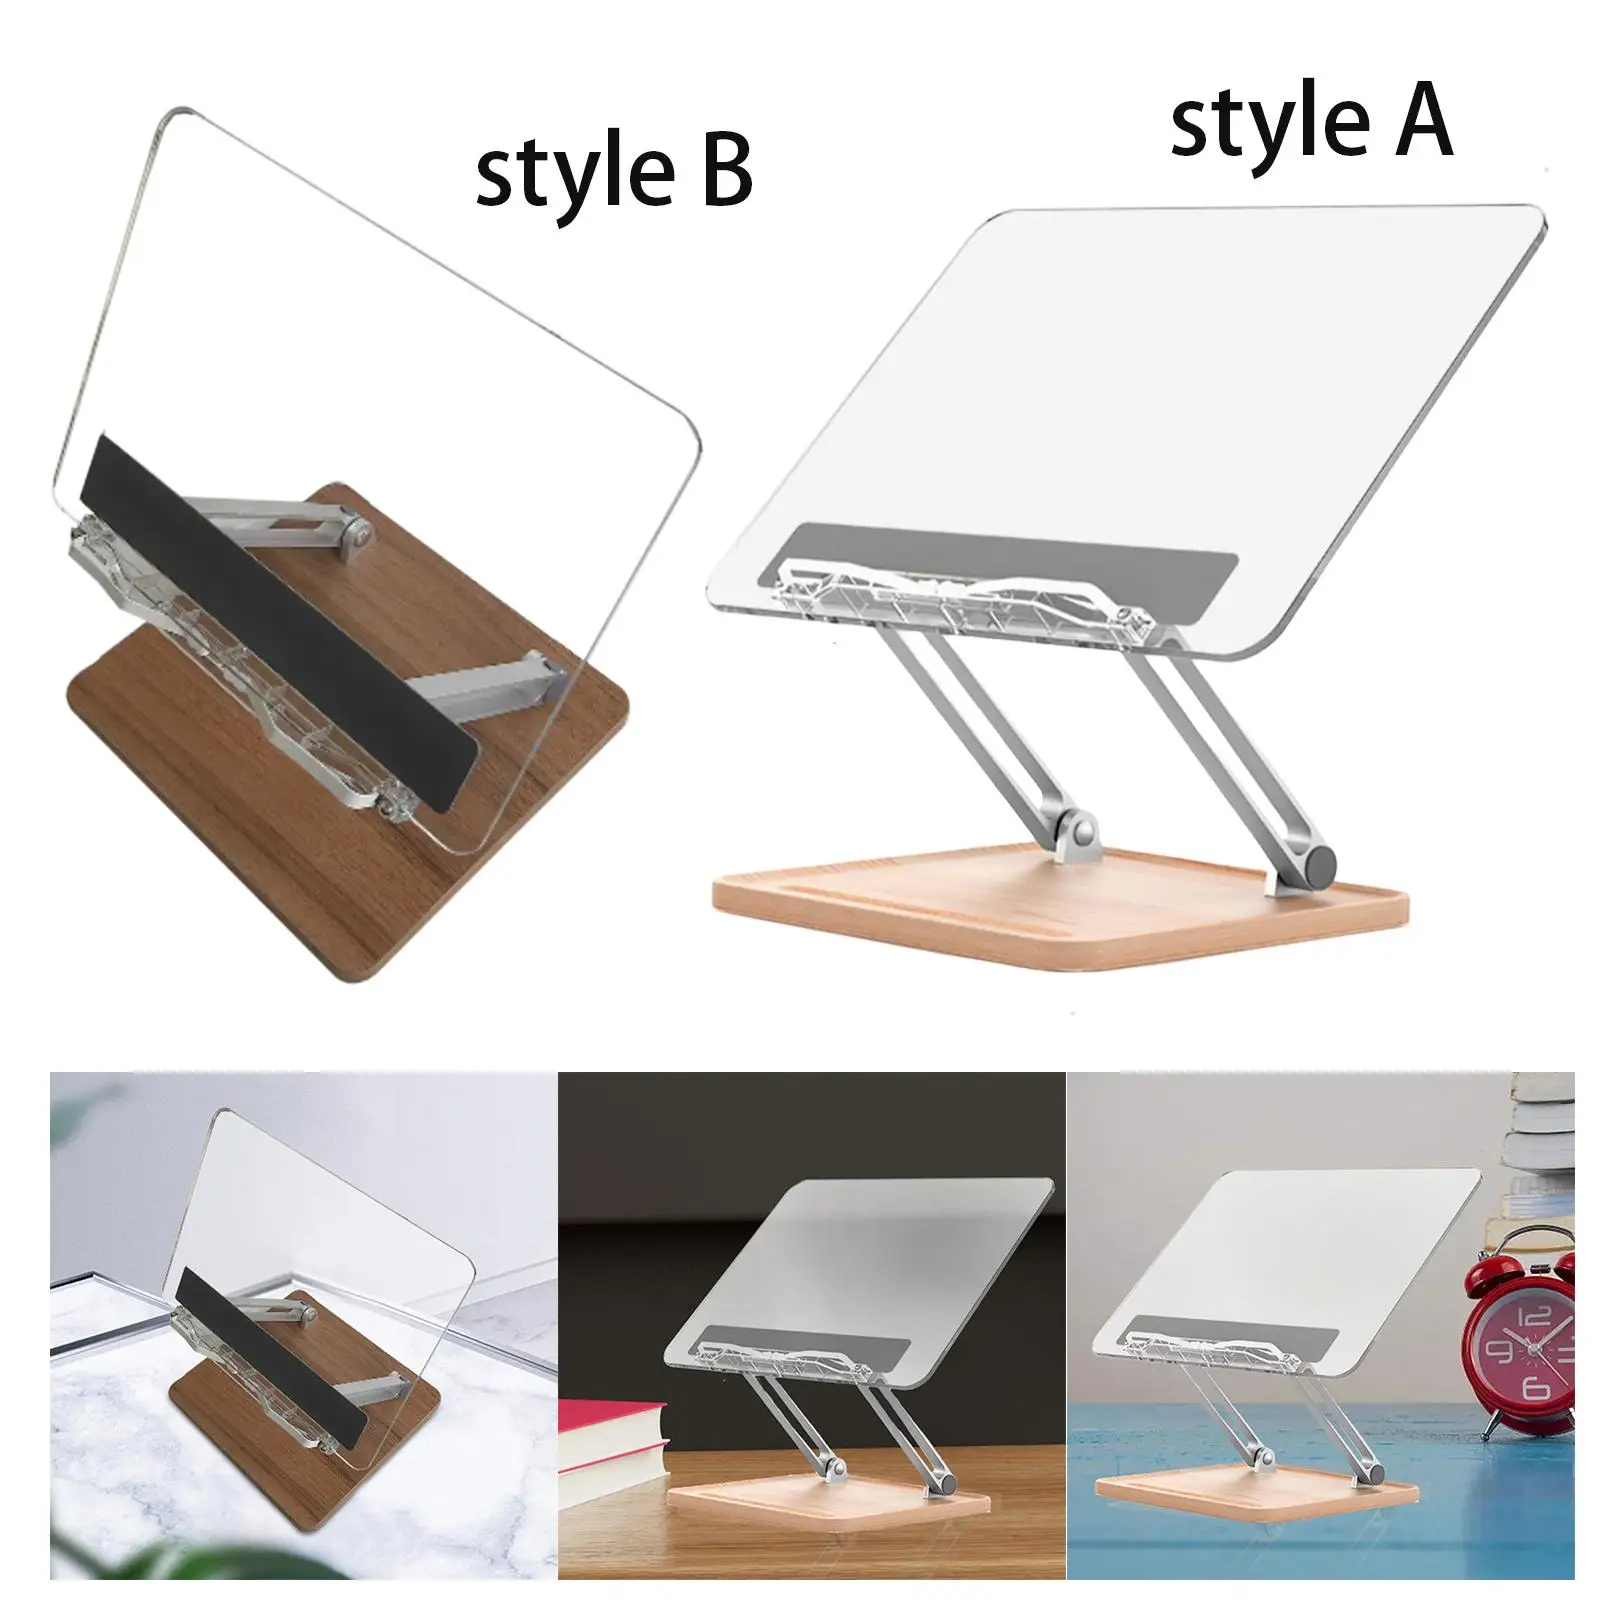 Book Holder Stand Retractable Steady Multi Height Angles Hands Free Tablet Holder for Desk Desktop Bedroom Mobile Phone Document